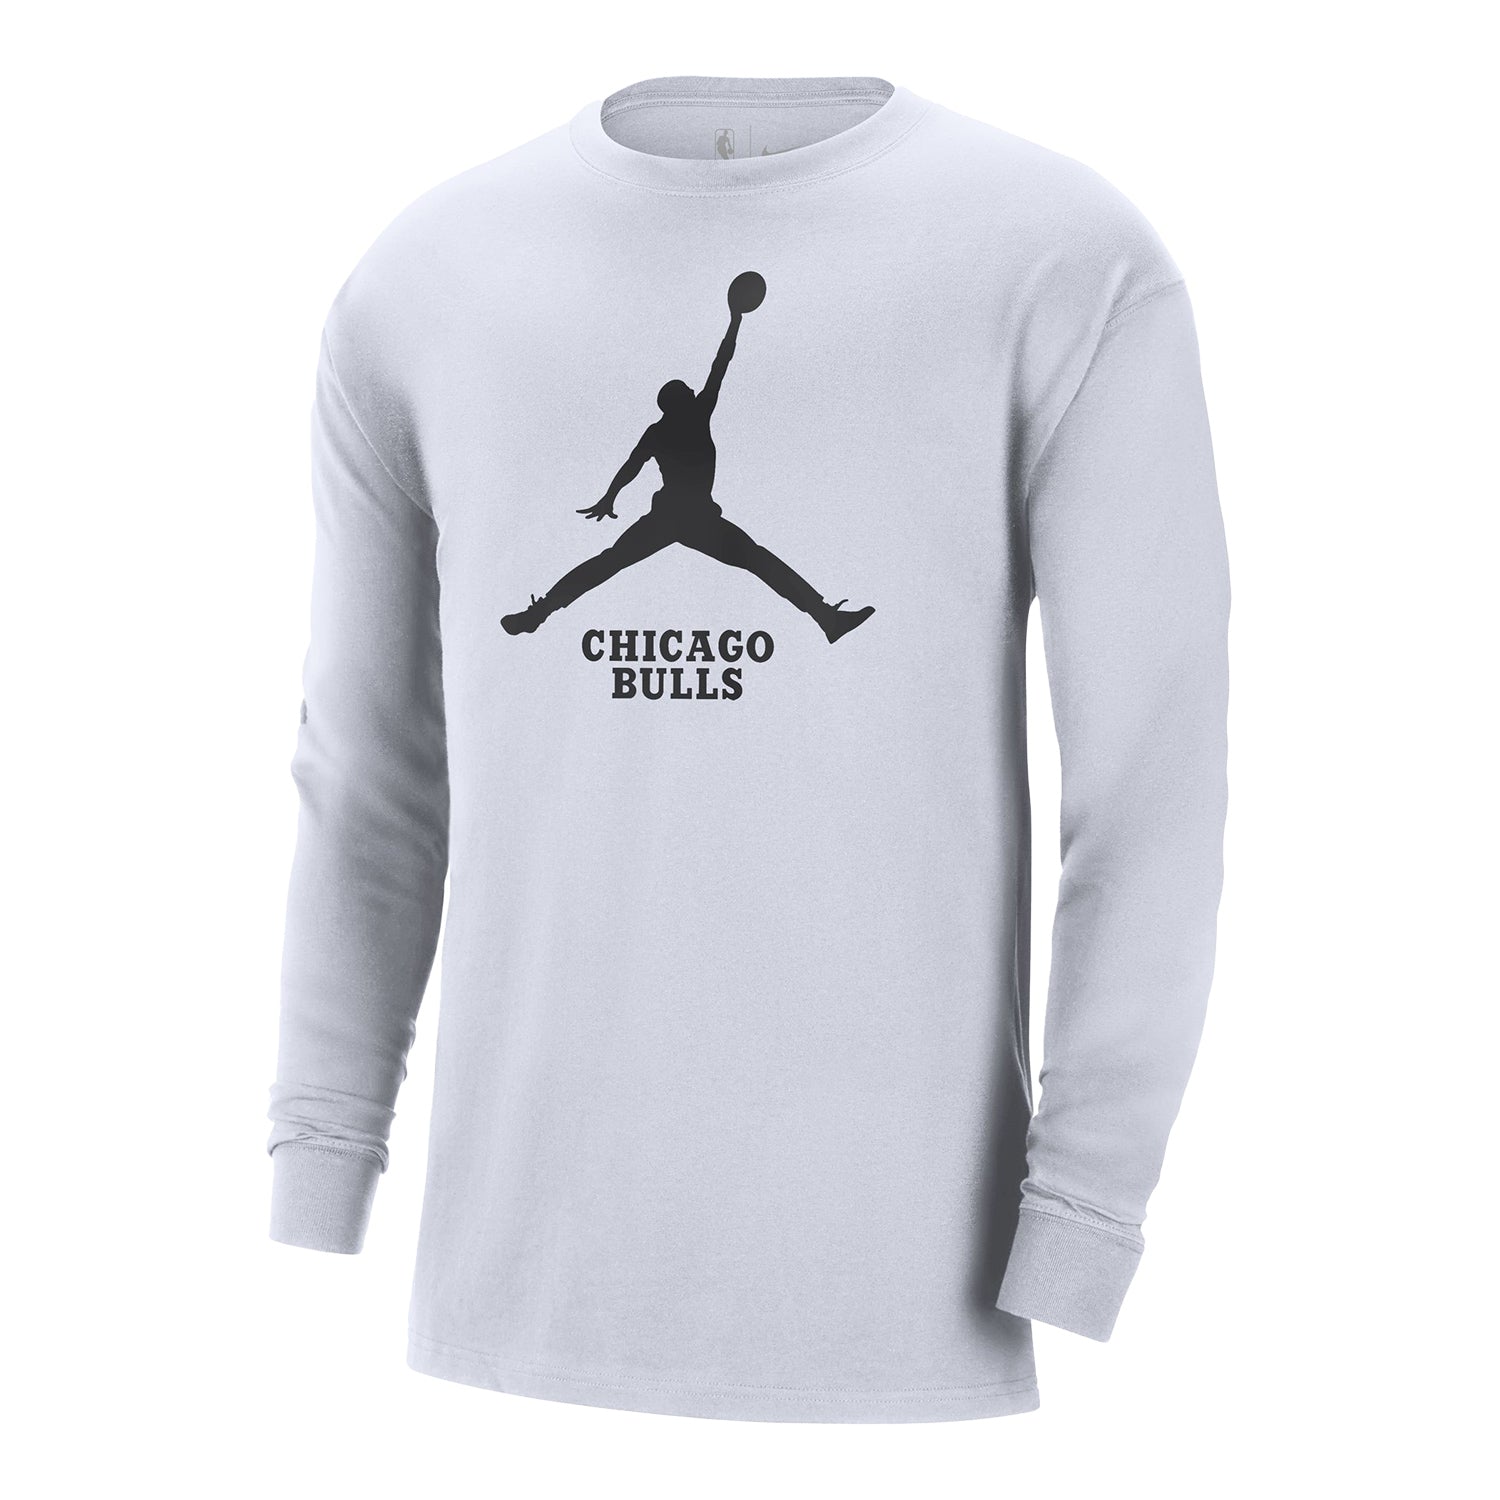 Pippen, Rodman, Jordan Bulls Essential T-Shirt for Sale by